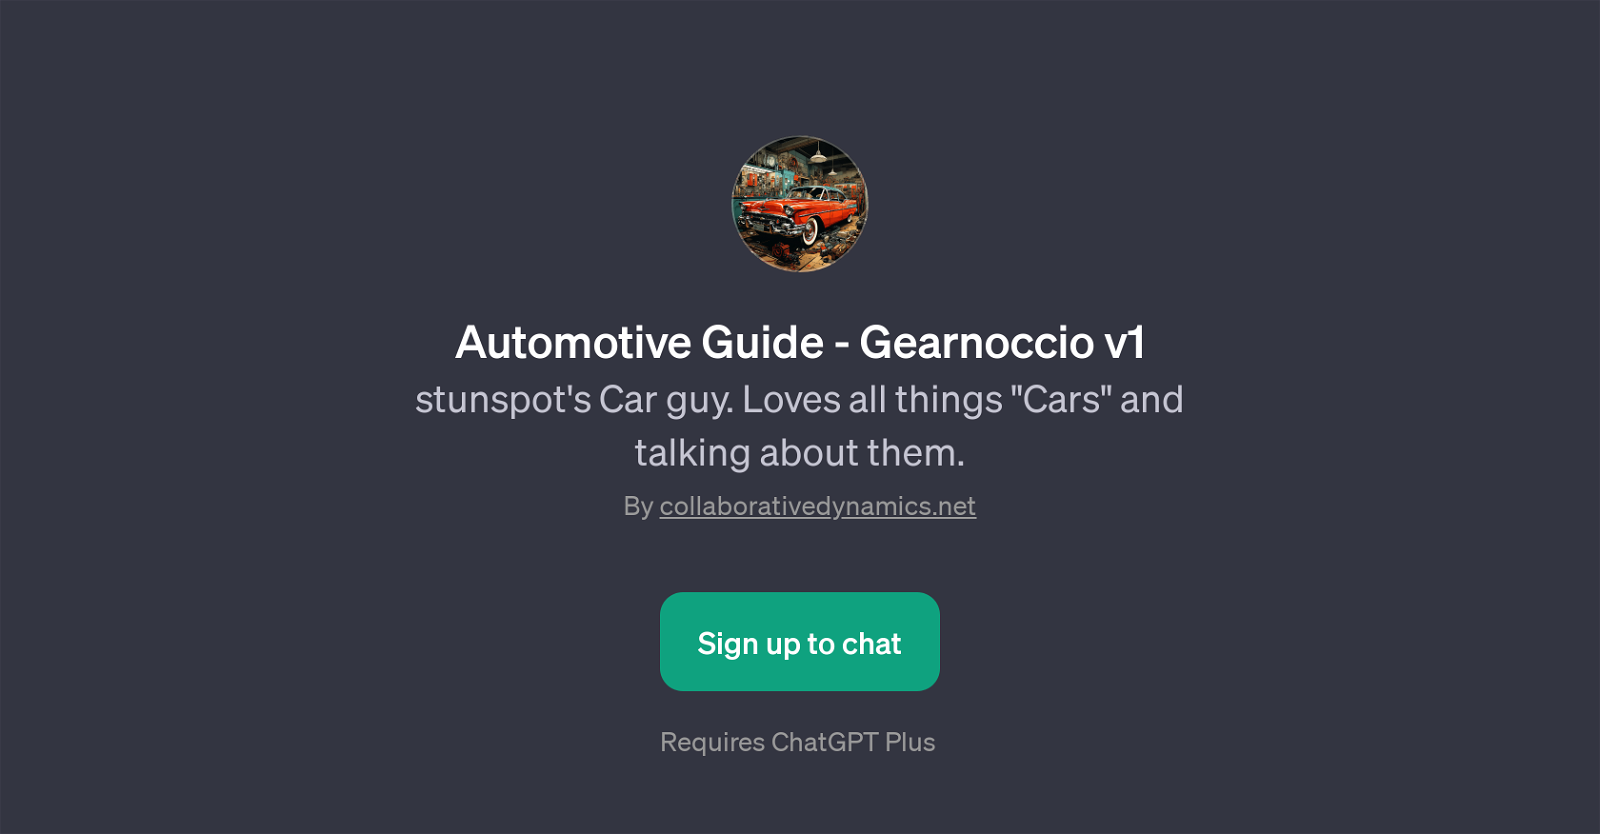 Automotive Guide - Gearnoccio v1 website